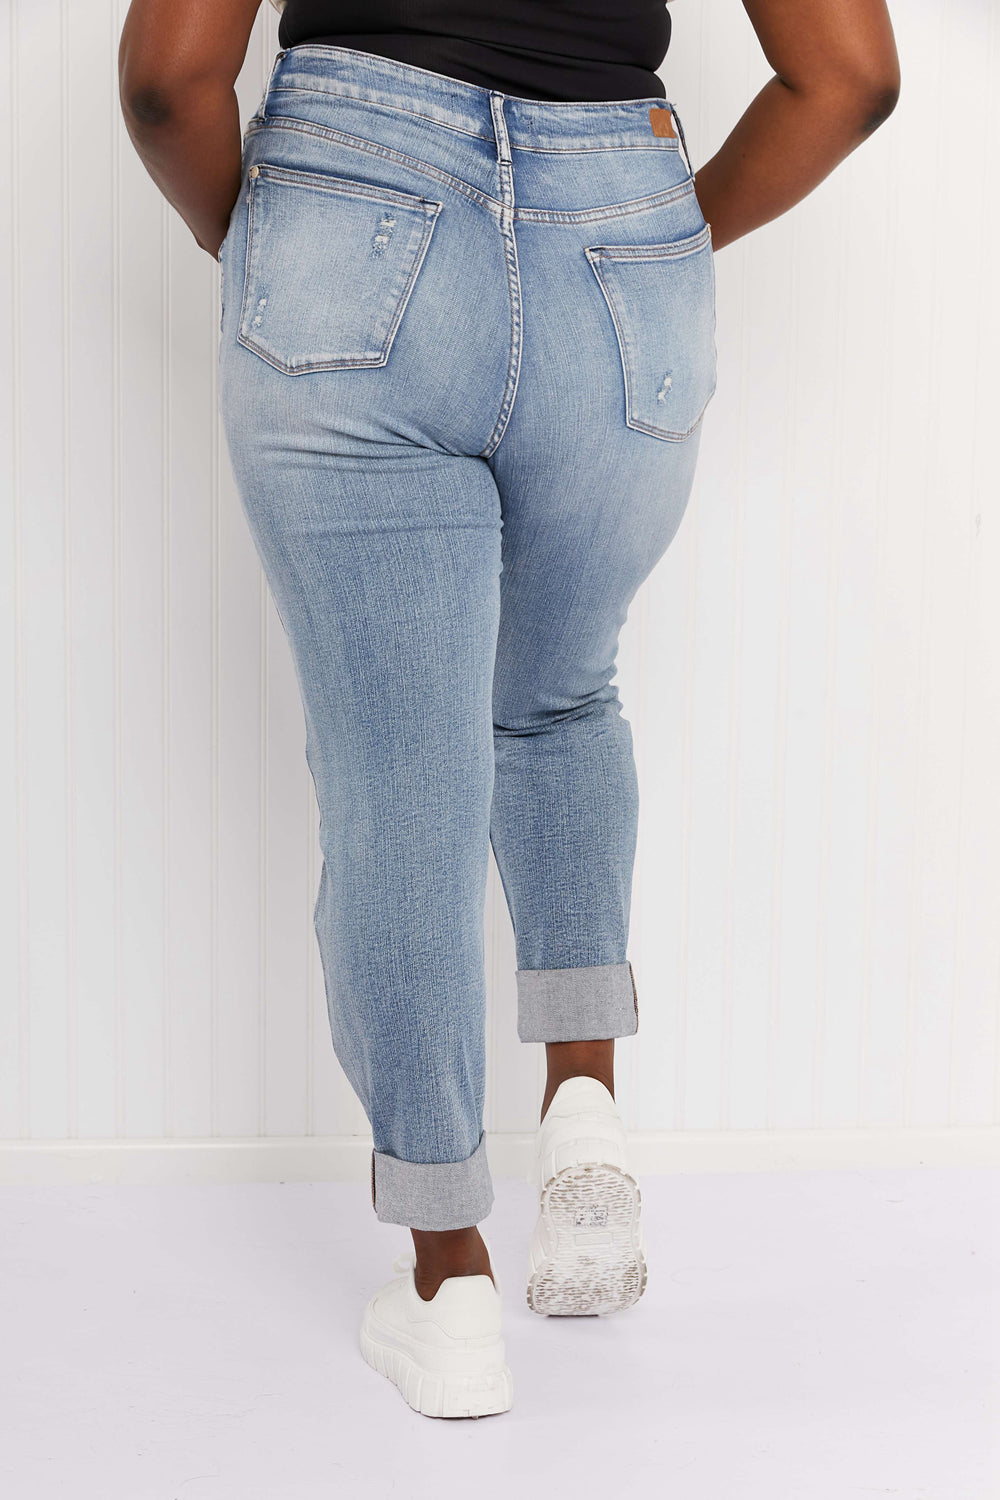 Judy Blue Fiona Full Size Double Cuffed Boyfriend Jeans Jeans JT's Designer Fashion